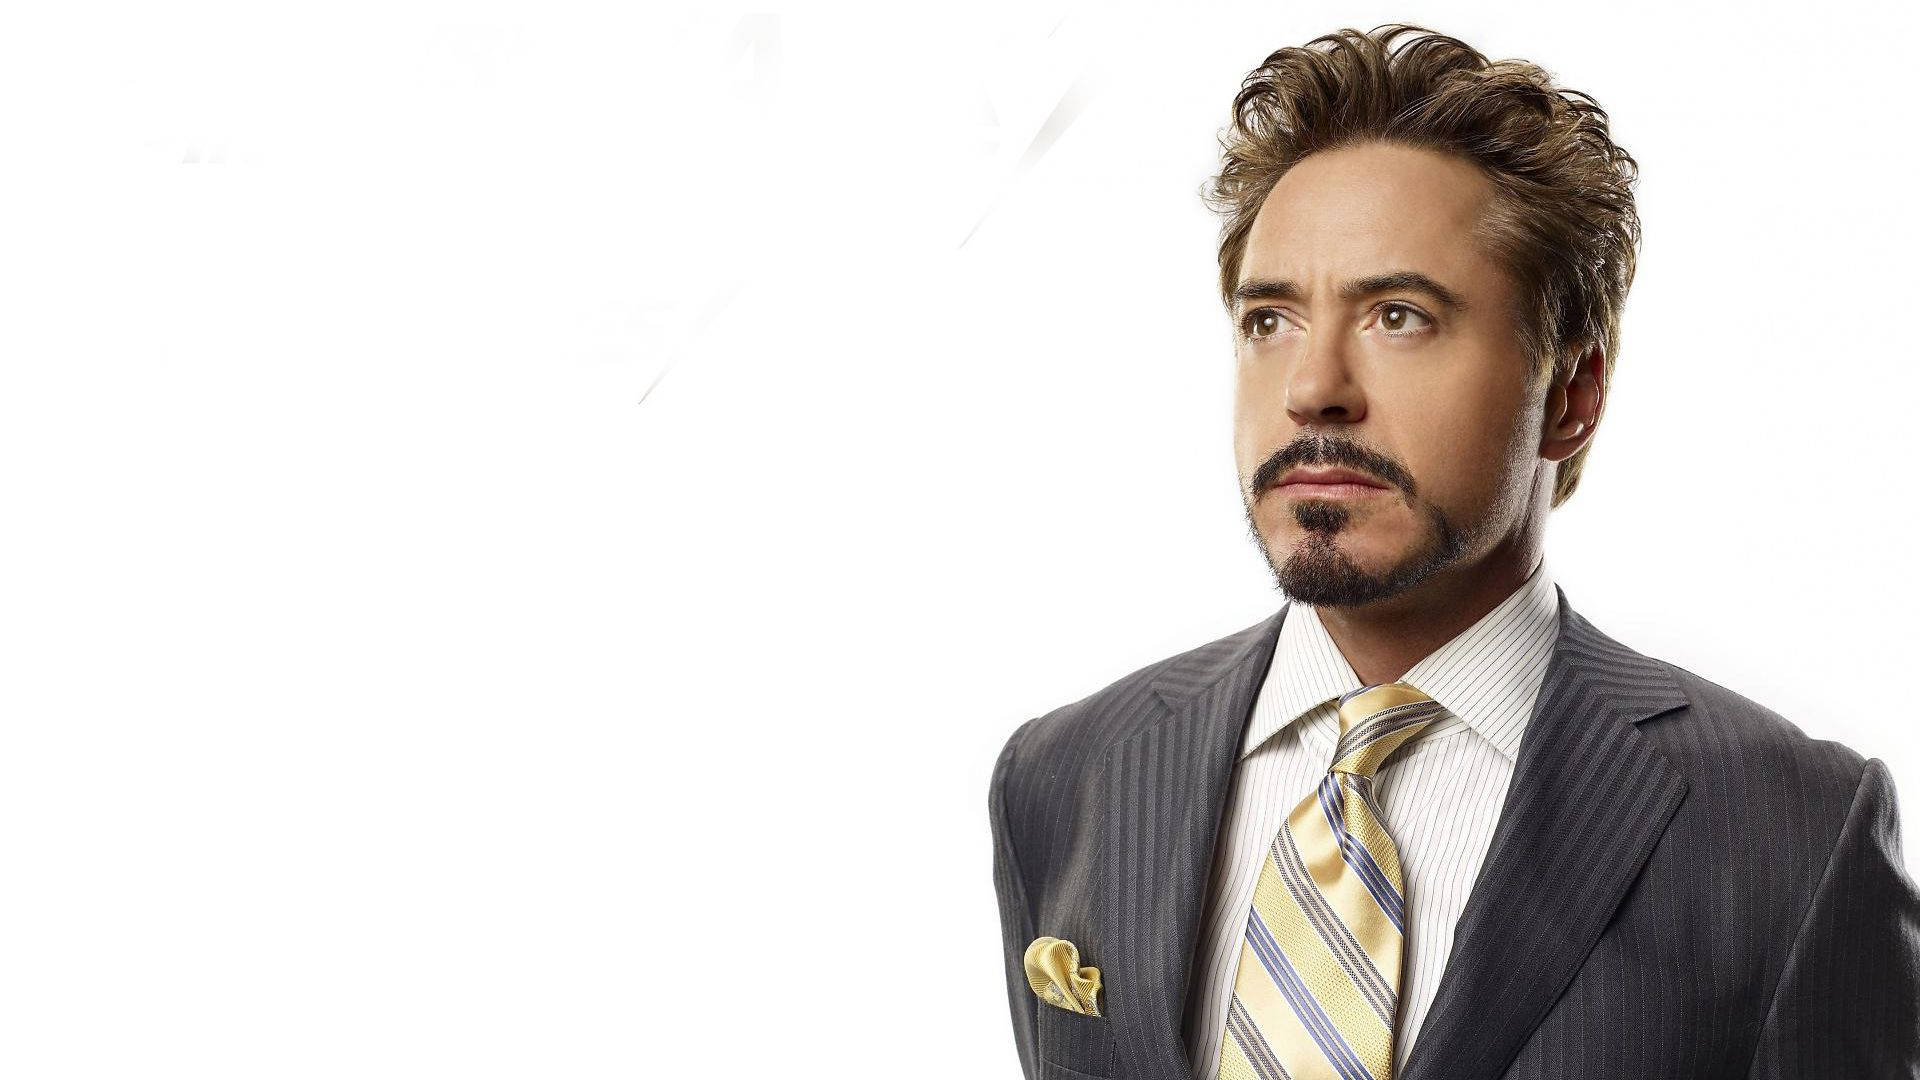 Gold Necktie Robert Downey Jr. Background